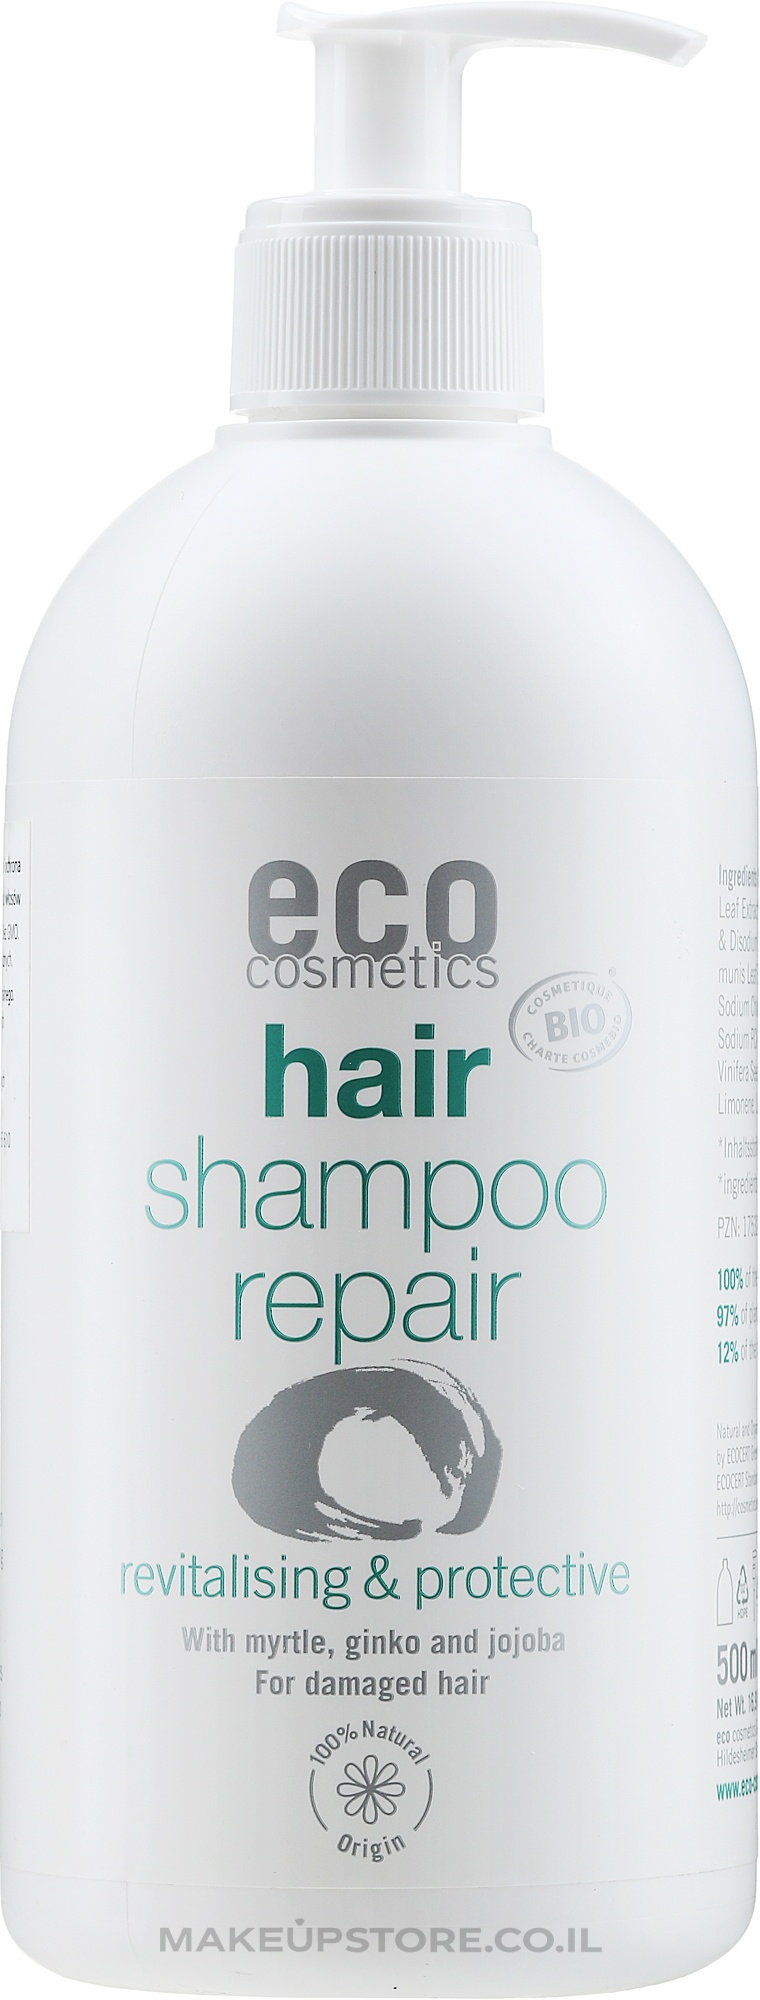 Eco Cosmetics Hair Shampoo Repair